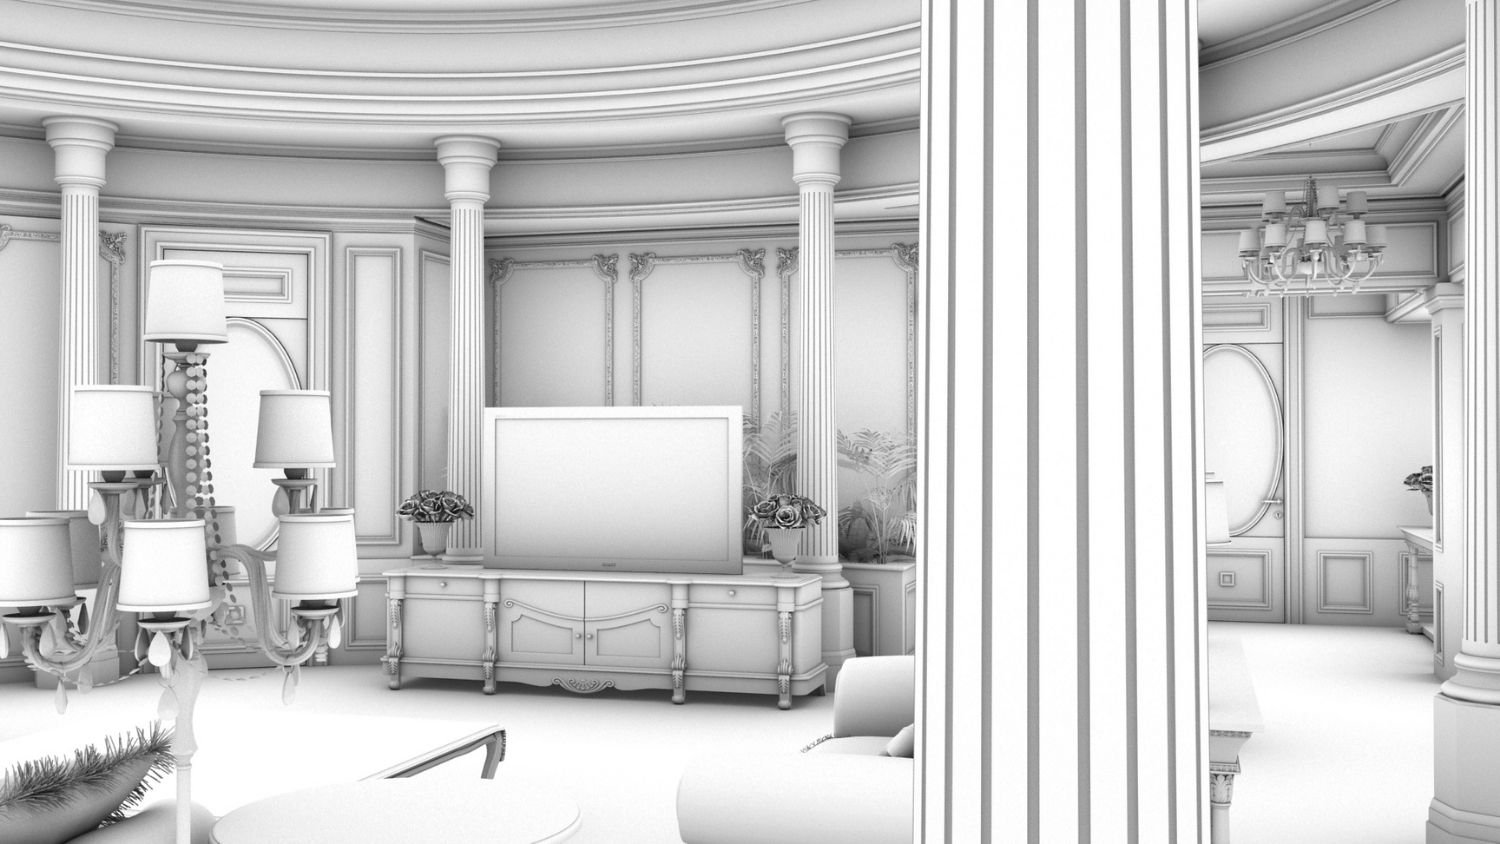 Ambassadori Royal Suite hall's 3D modelling | Studio D73